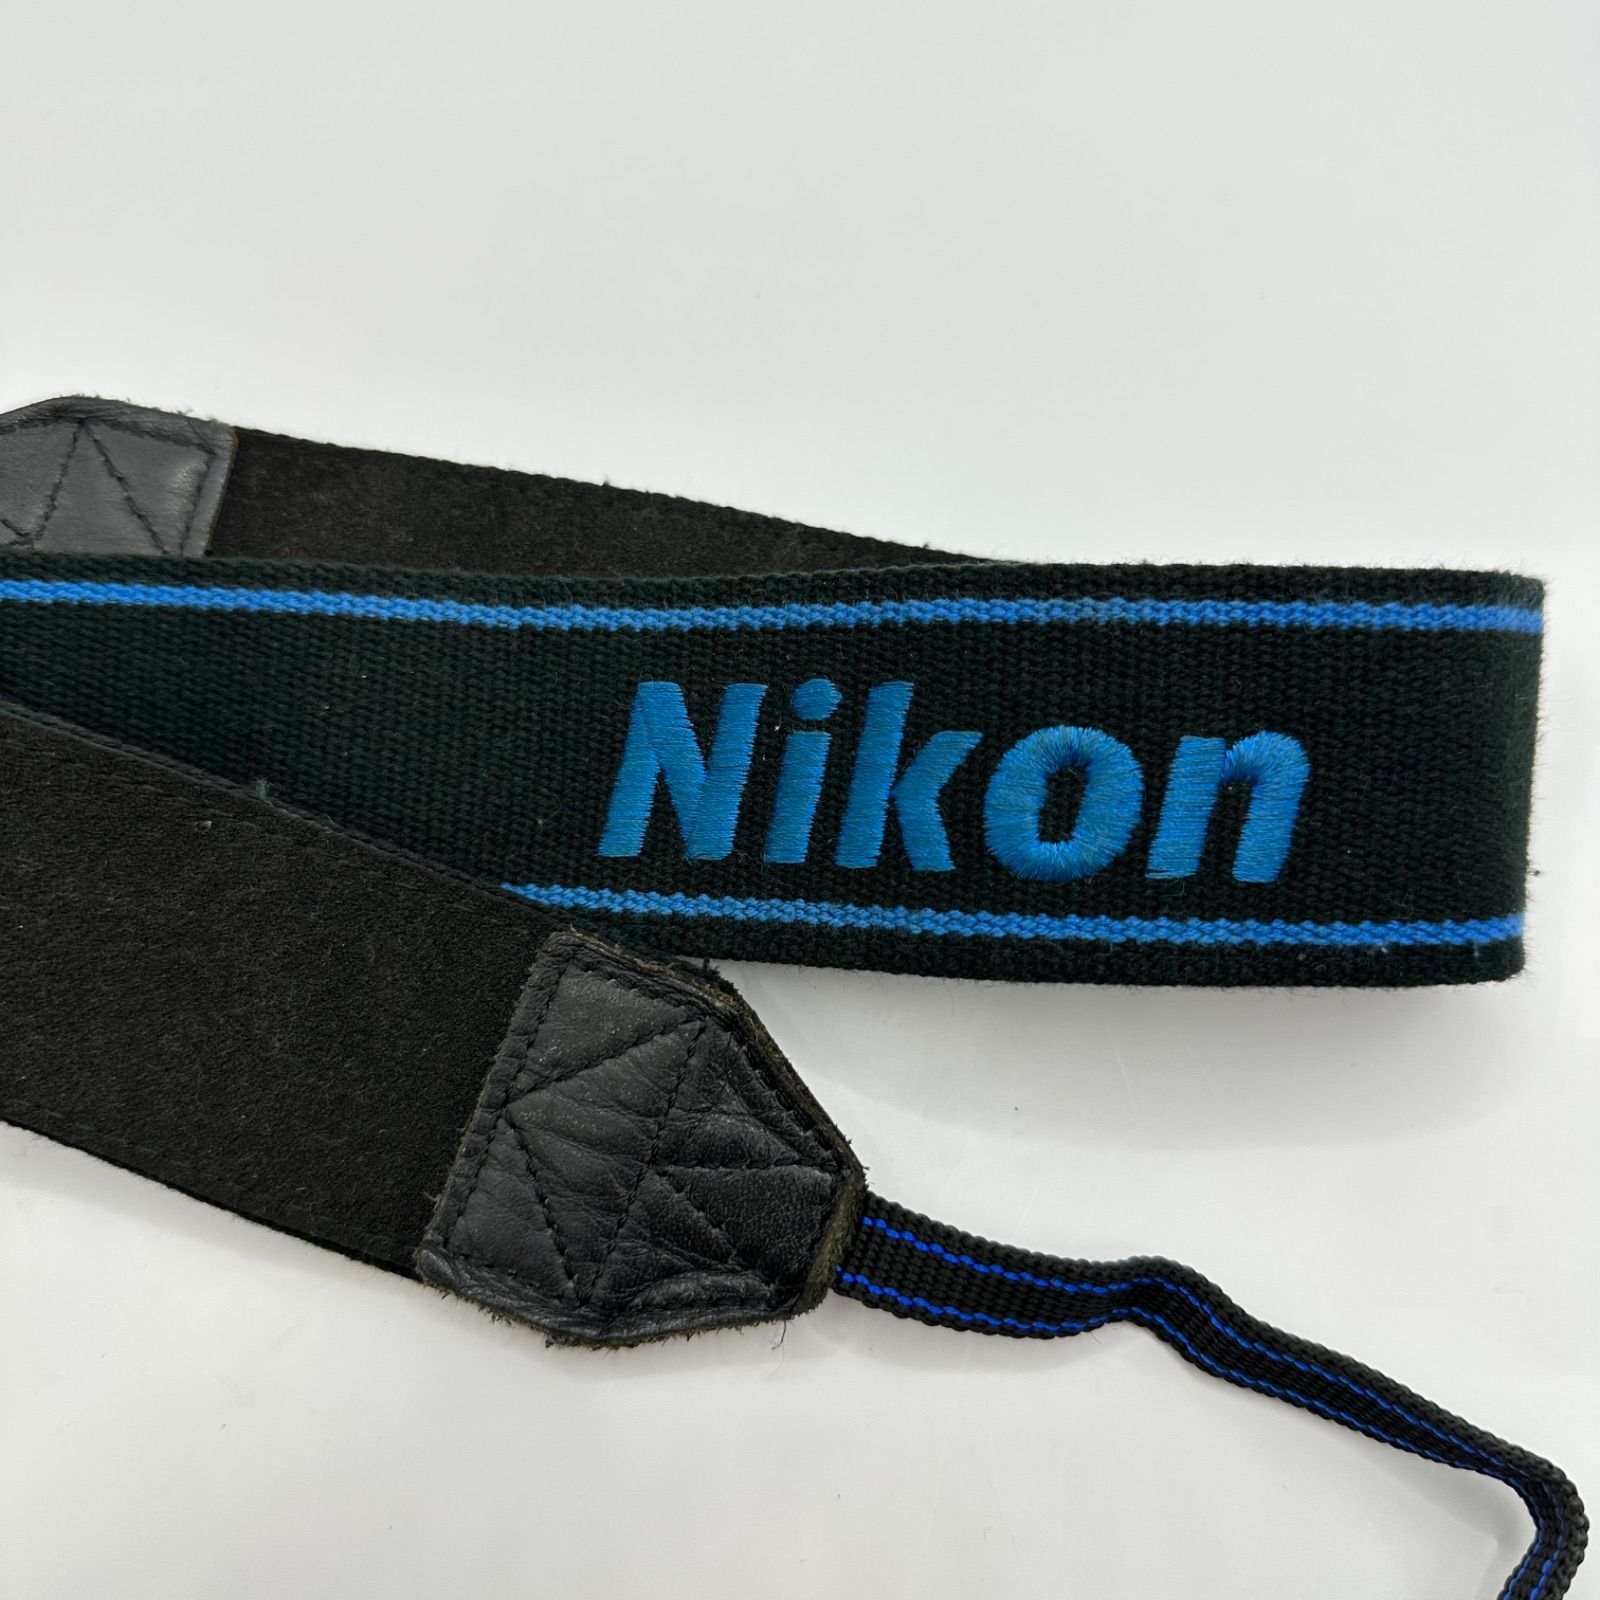 Nikon for professional プロフェッショナル ストラップ ブルー 青 黒 - メルカリ